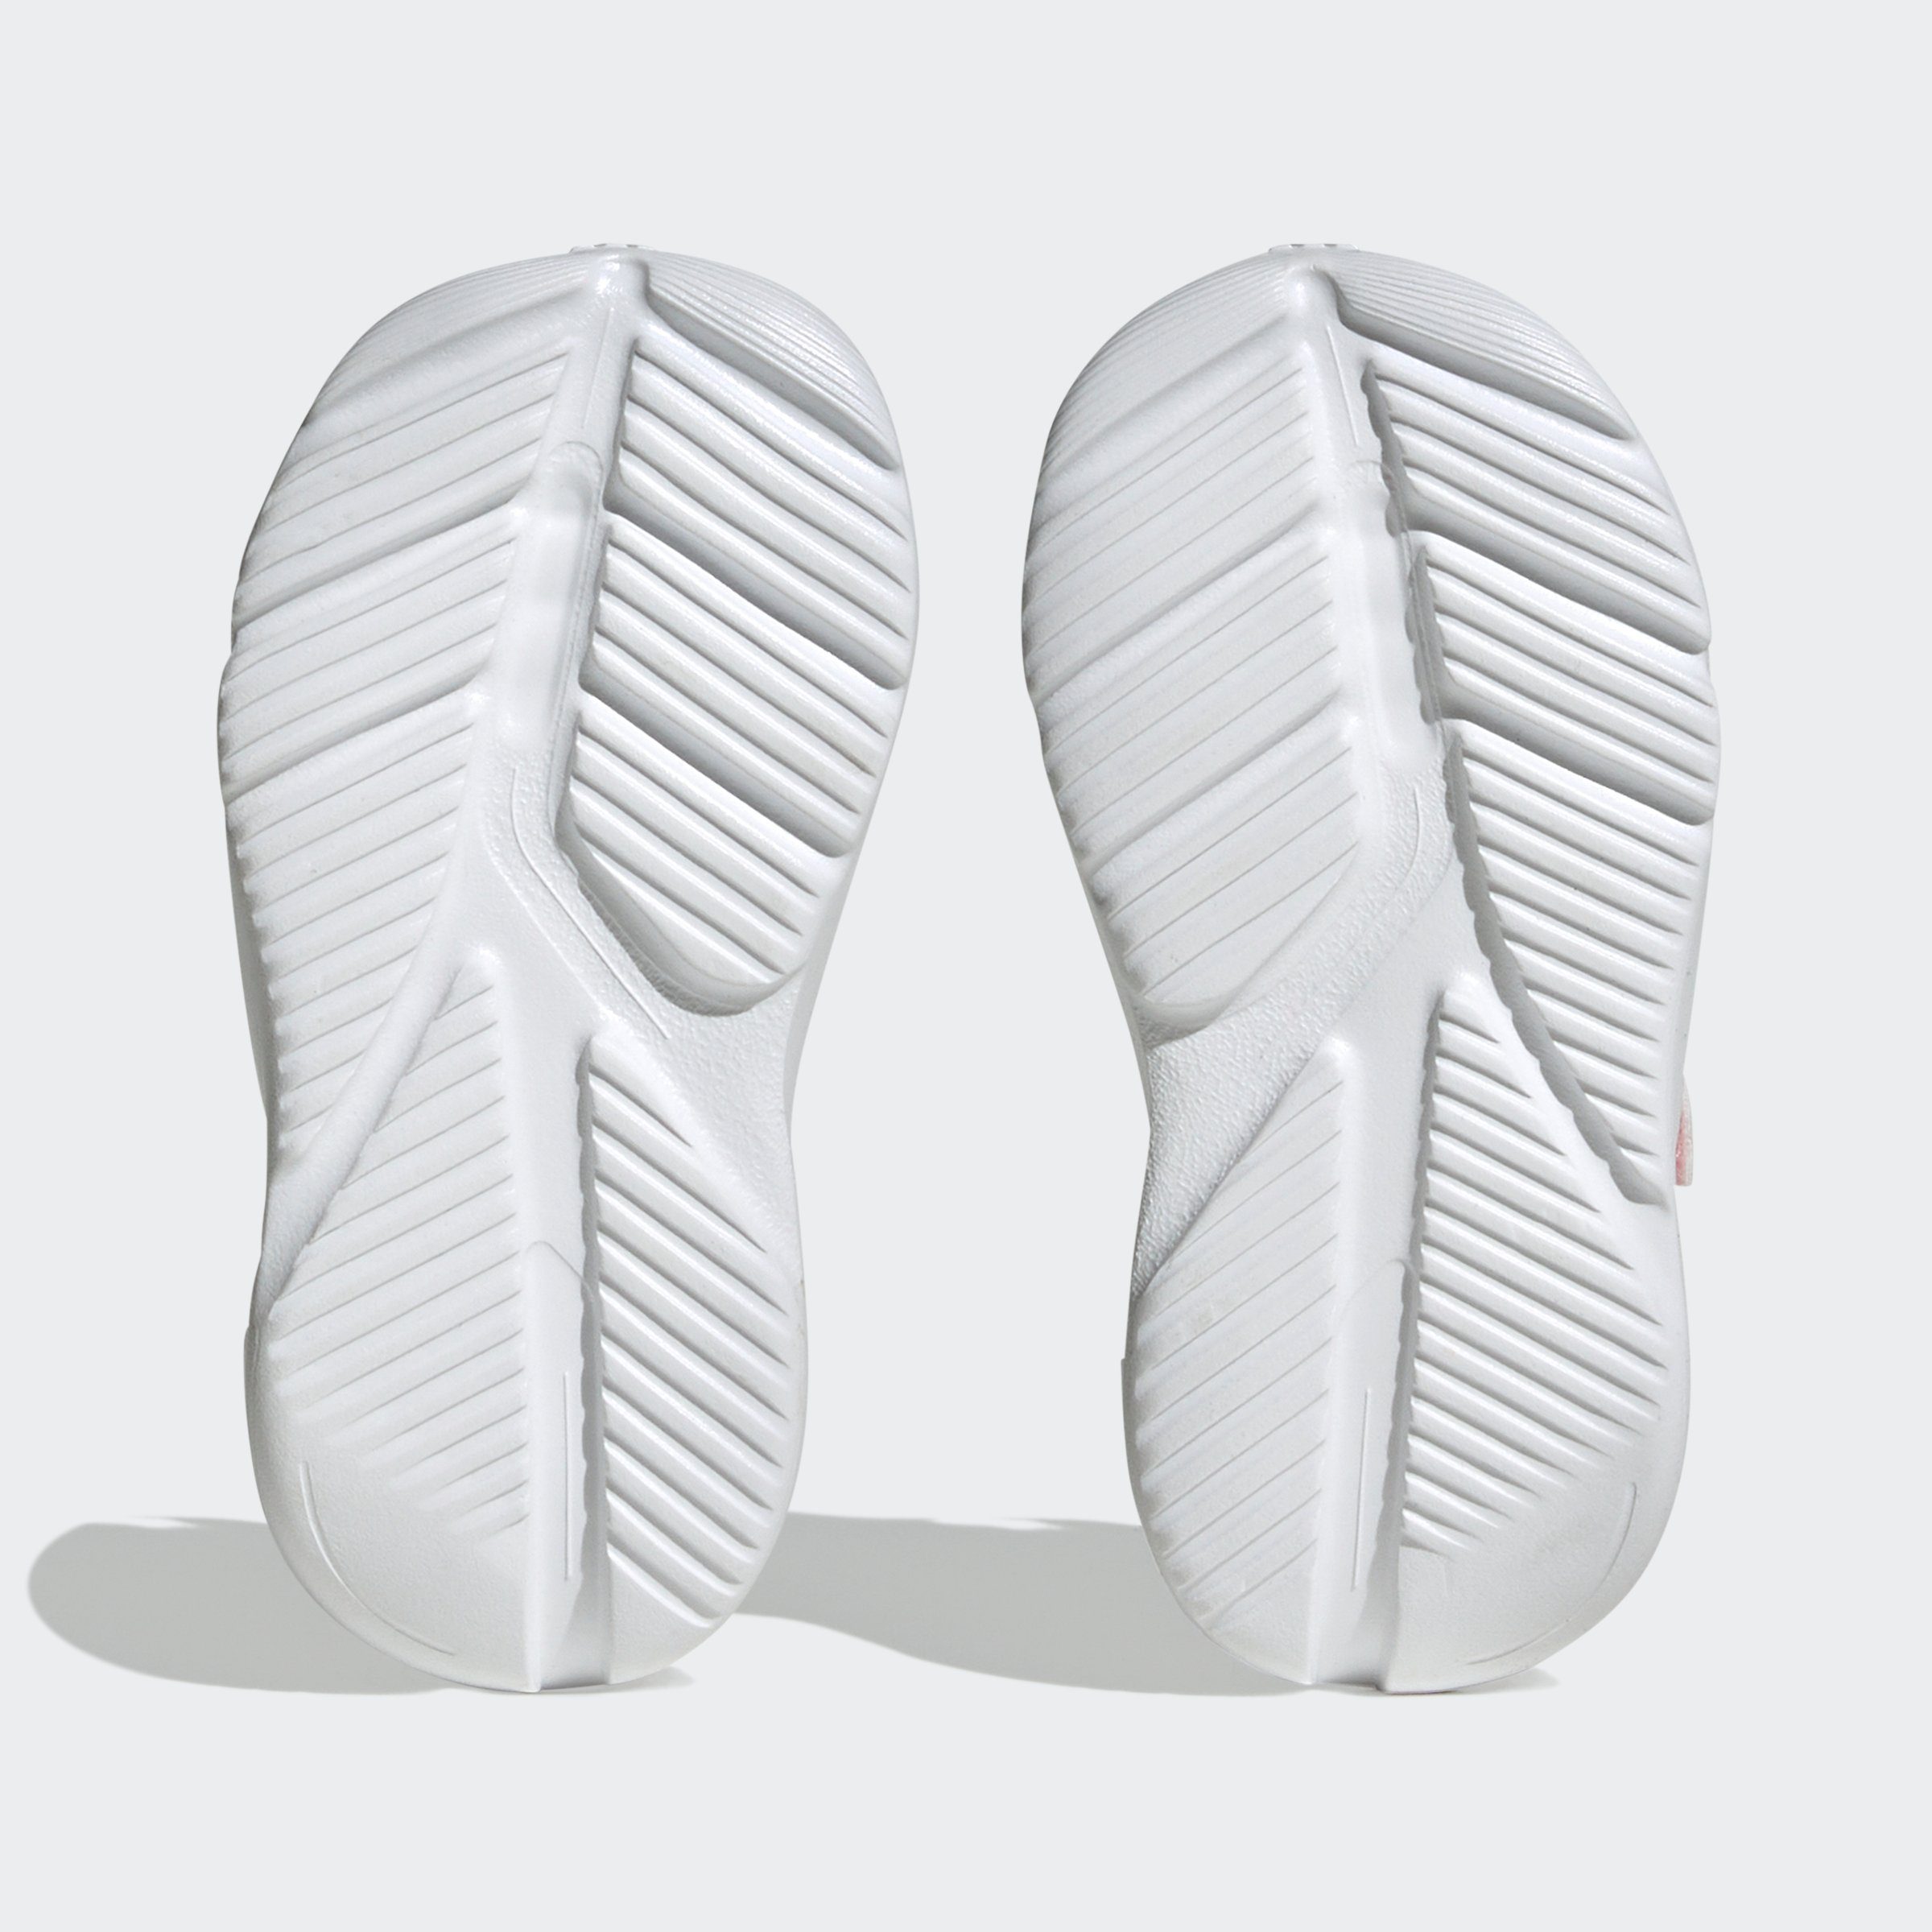 adidas Sportswear KIDS Fusion Pink Cloud / DURAMO / Clear White Sneaker Pink SL